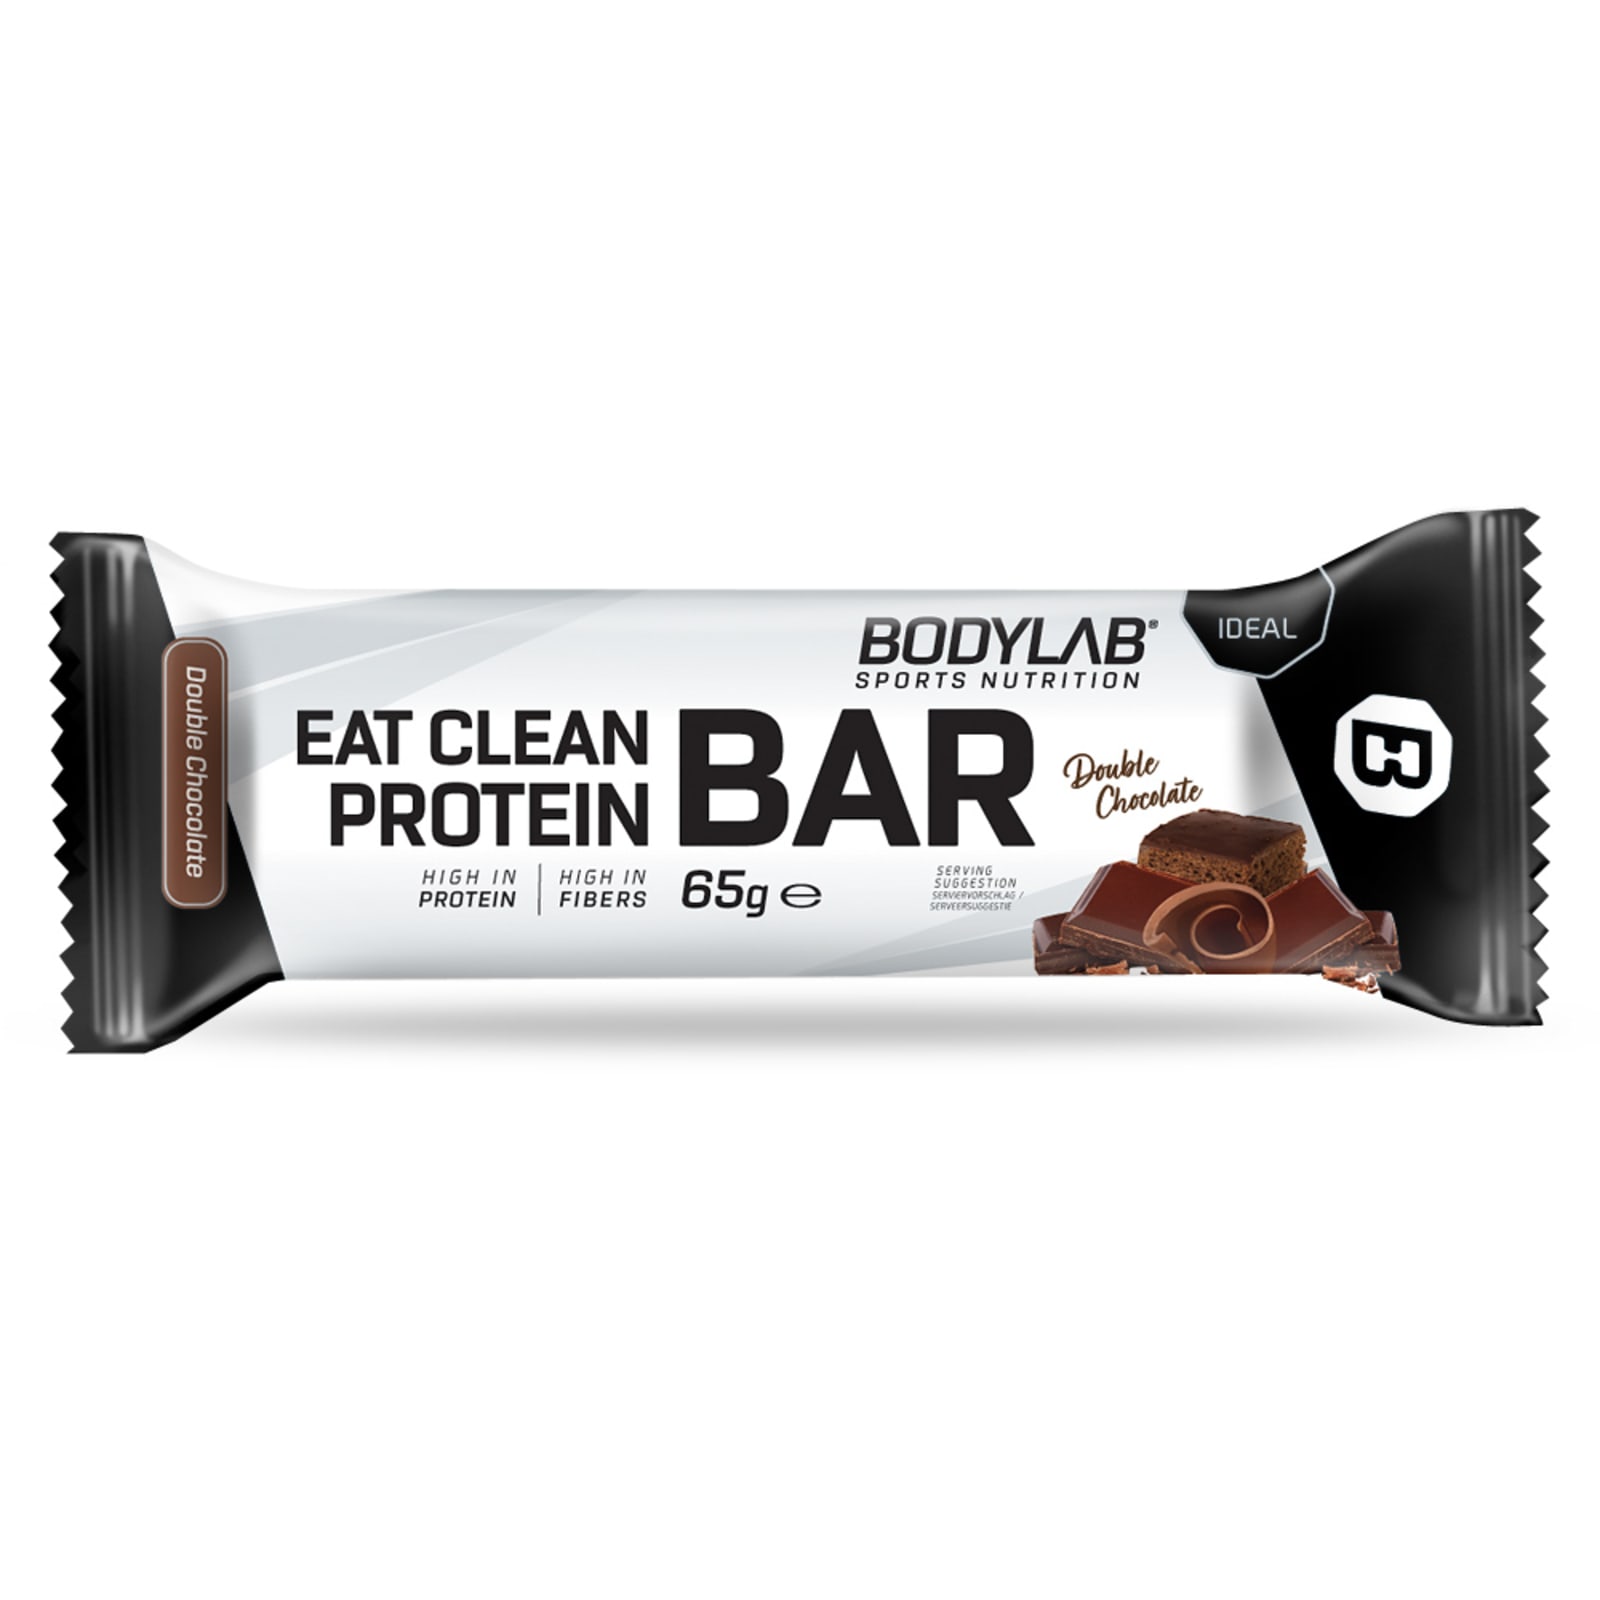 Eat Clean Protein Bar